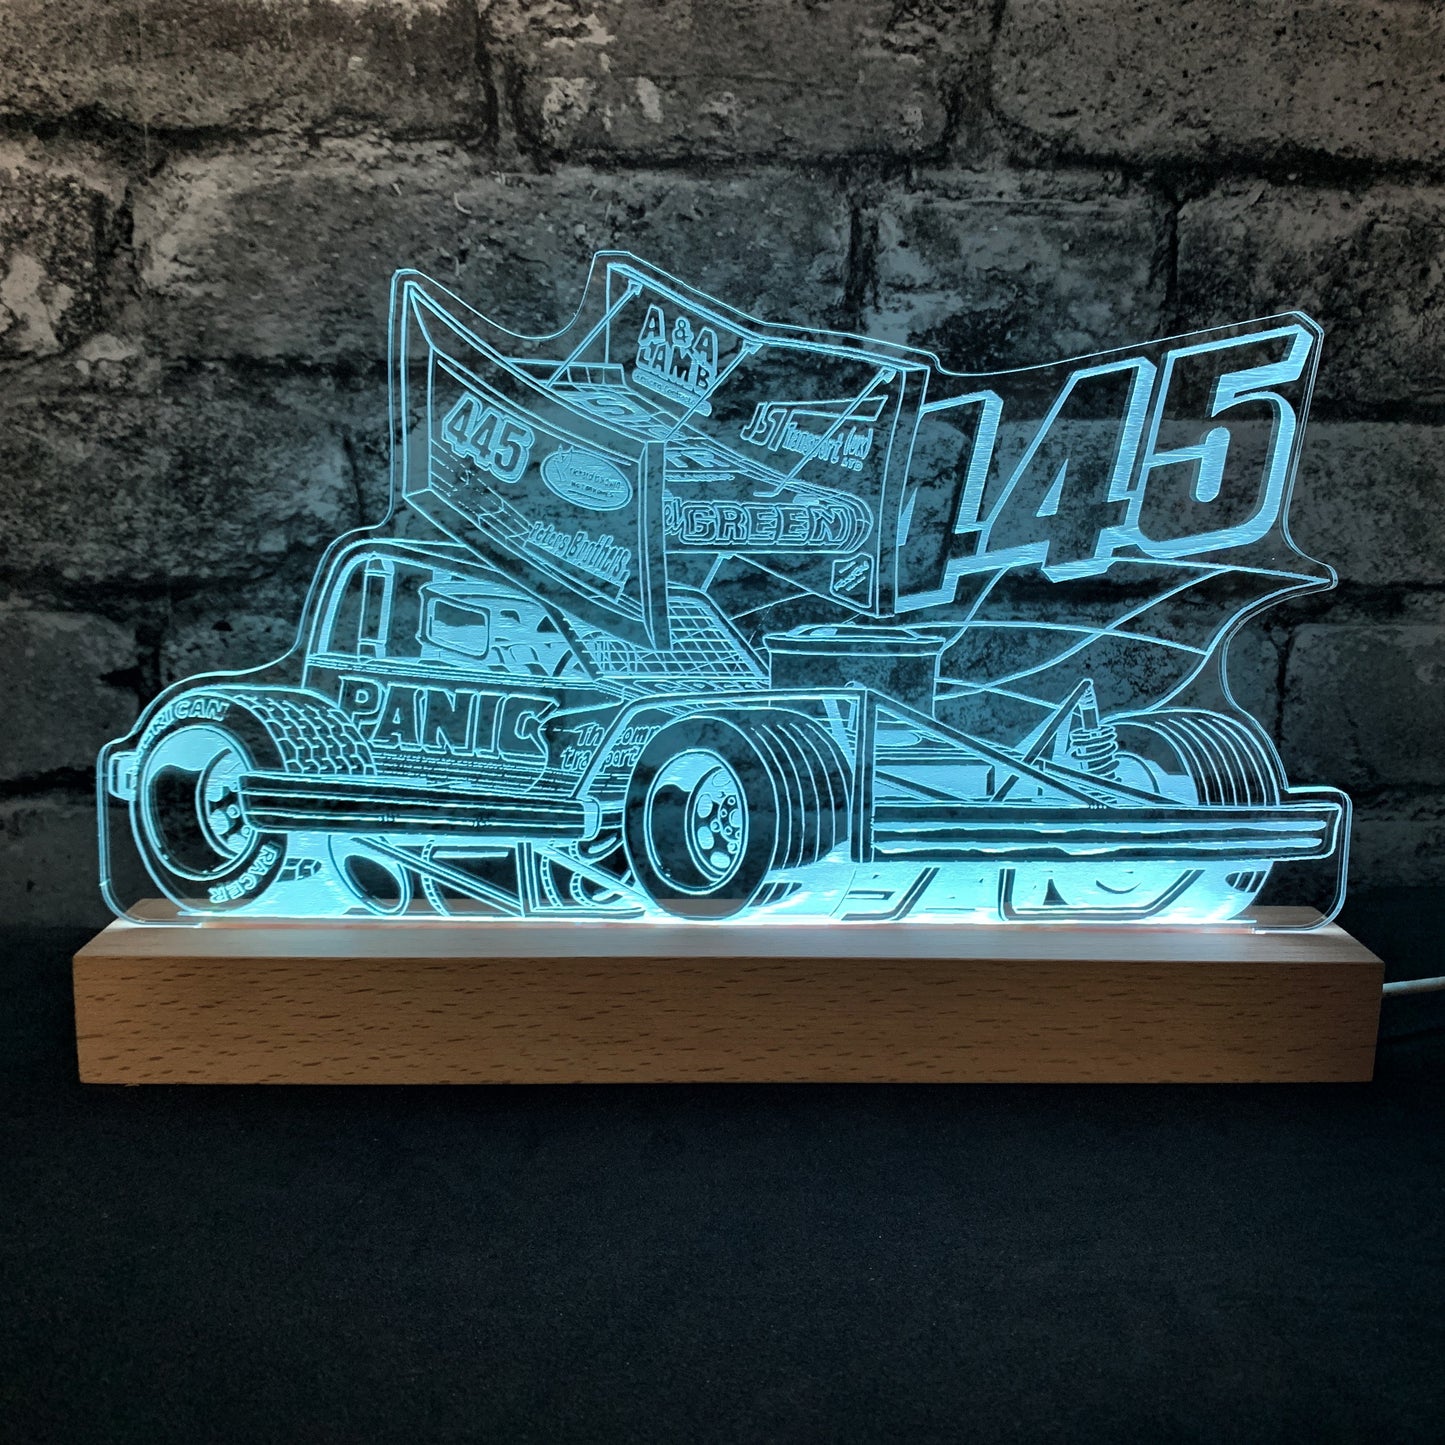 Nigel Green 445 Brisca F1 Night Light - Large Wooden Base - Night Light - Stock Car & Banger Toy Tracks